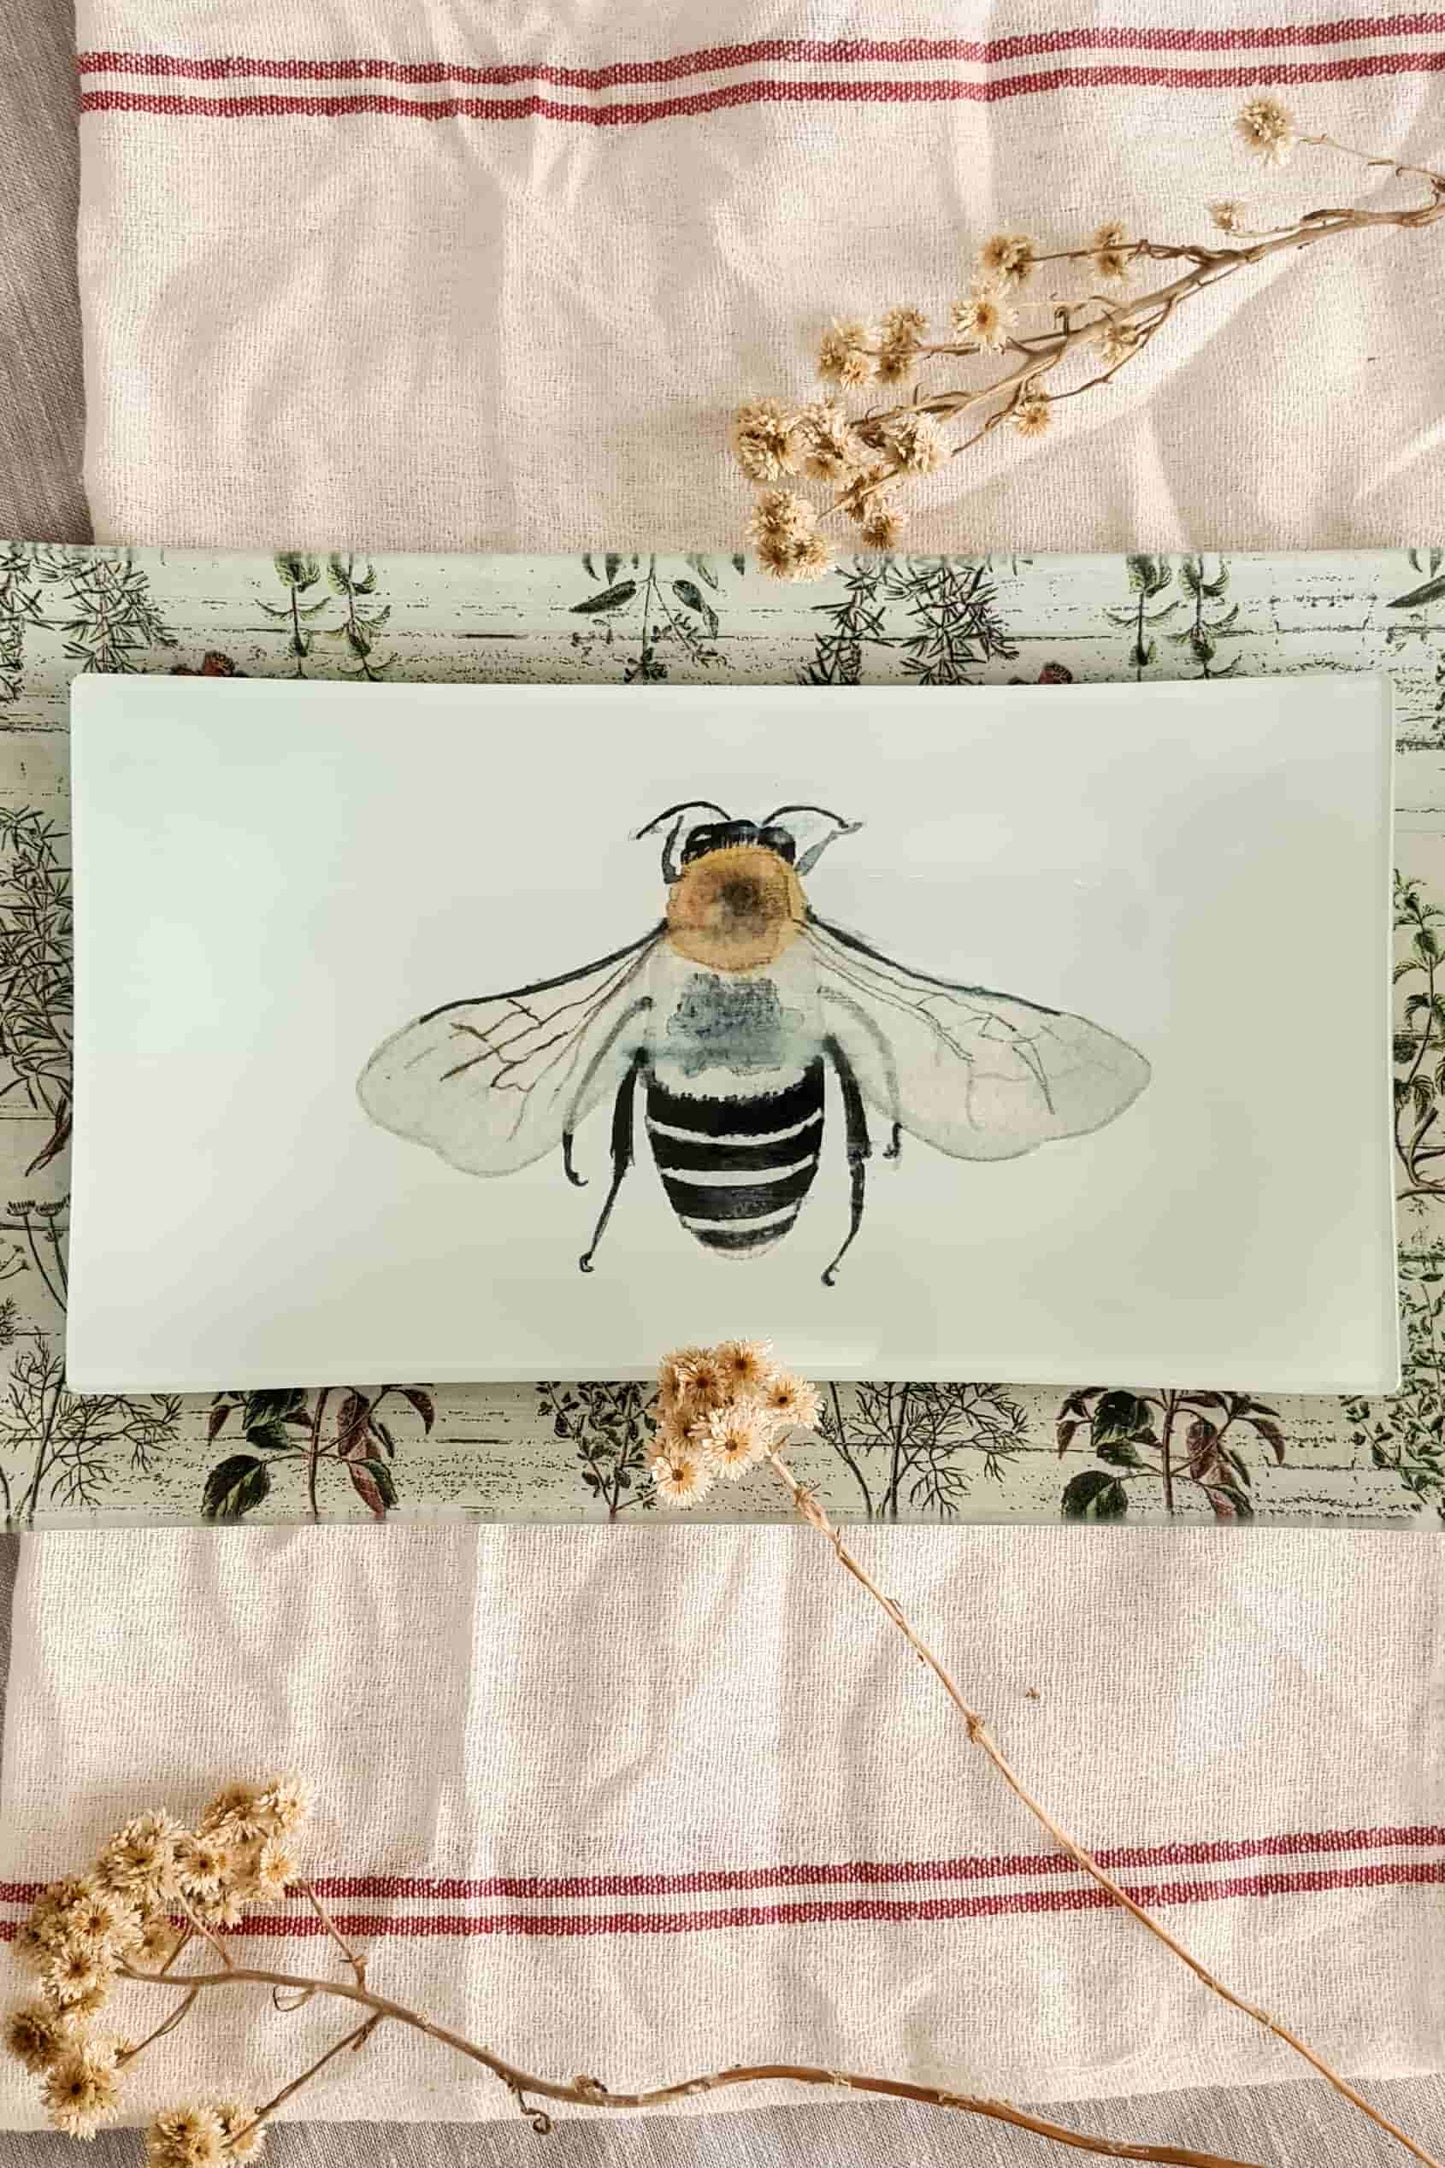 Bandeja rectangular grande abejas